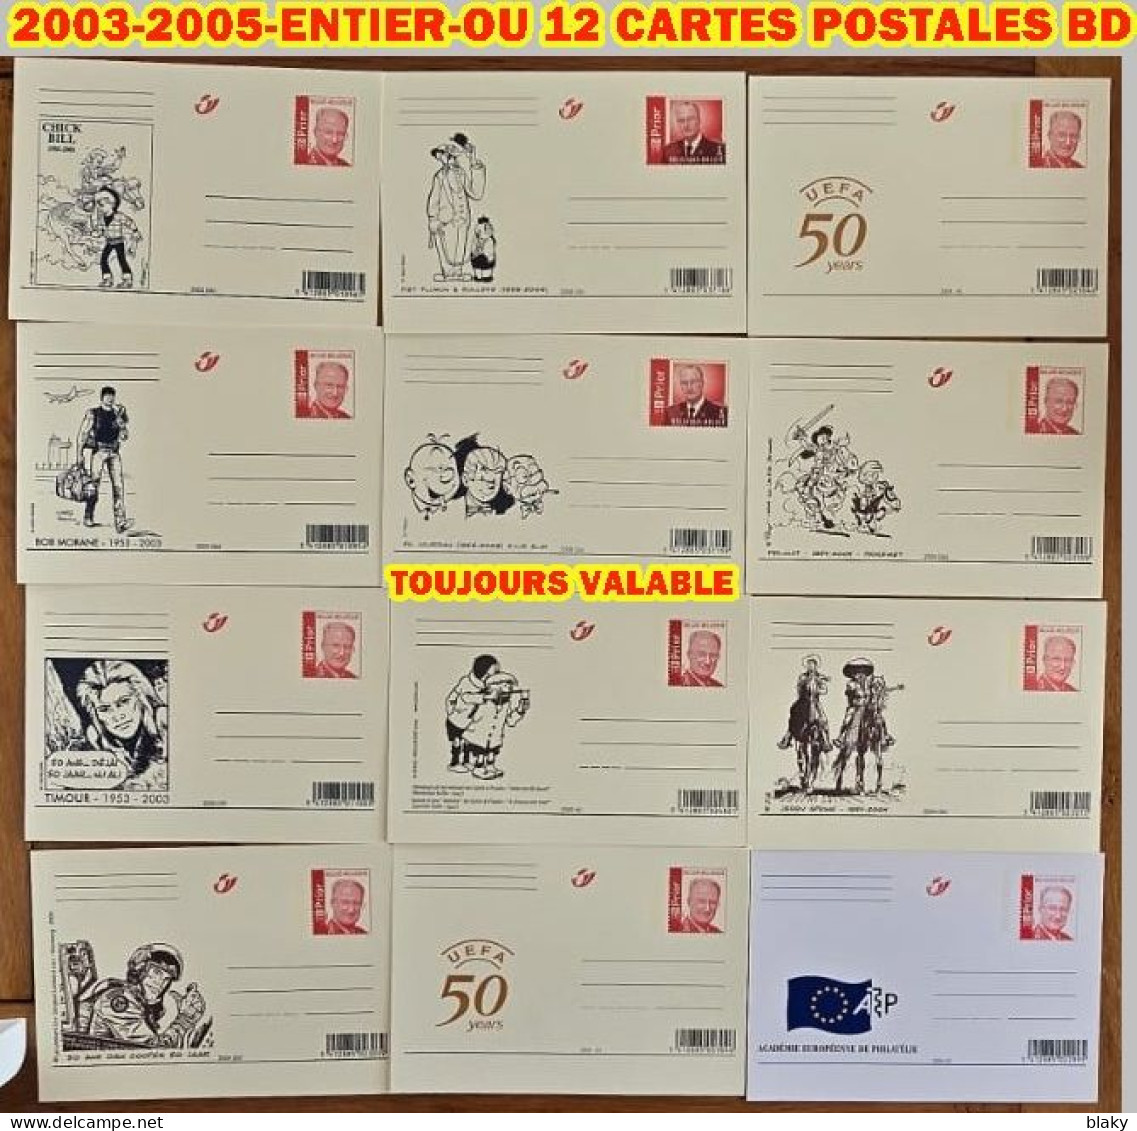 2003-2005-ENTIER-OU 12 CARTES POSTALES BD * IMPORTANT PRE TIMBREES - Geïllustreerde Briefkaarten (1971-2014) [BK]